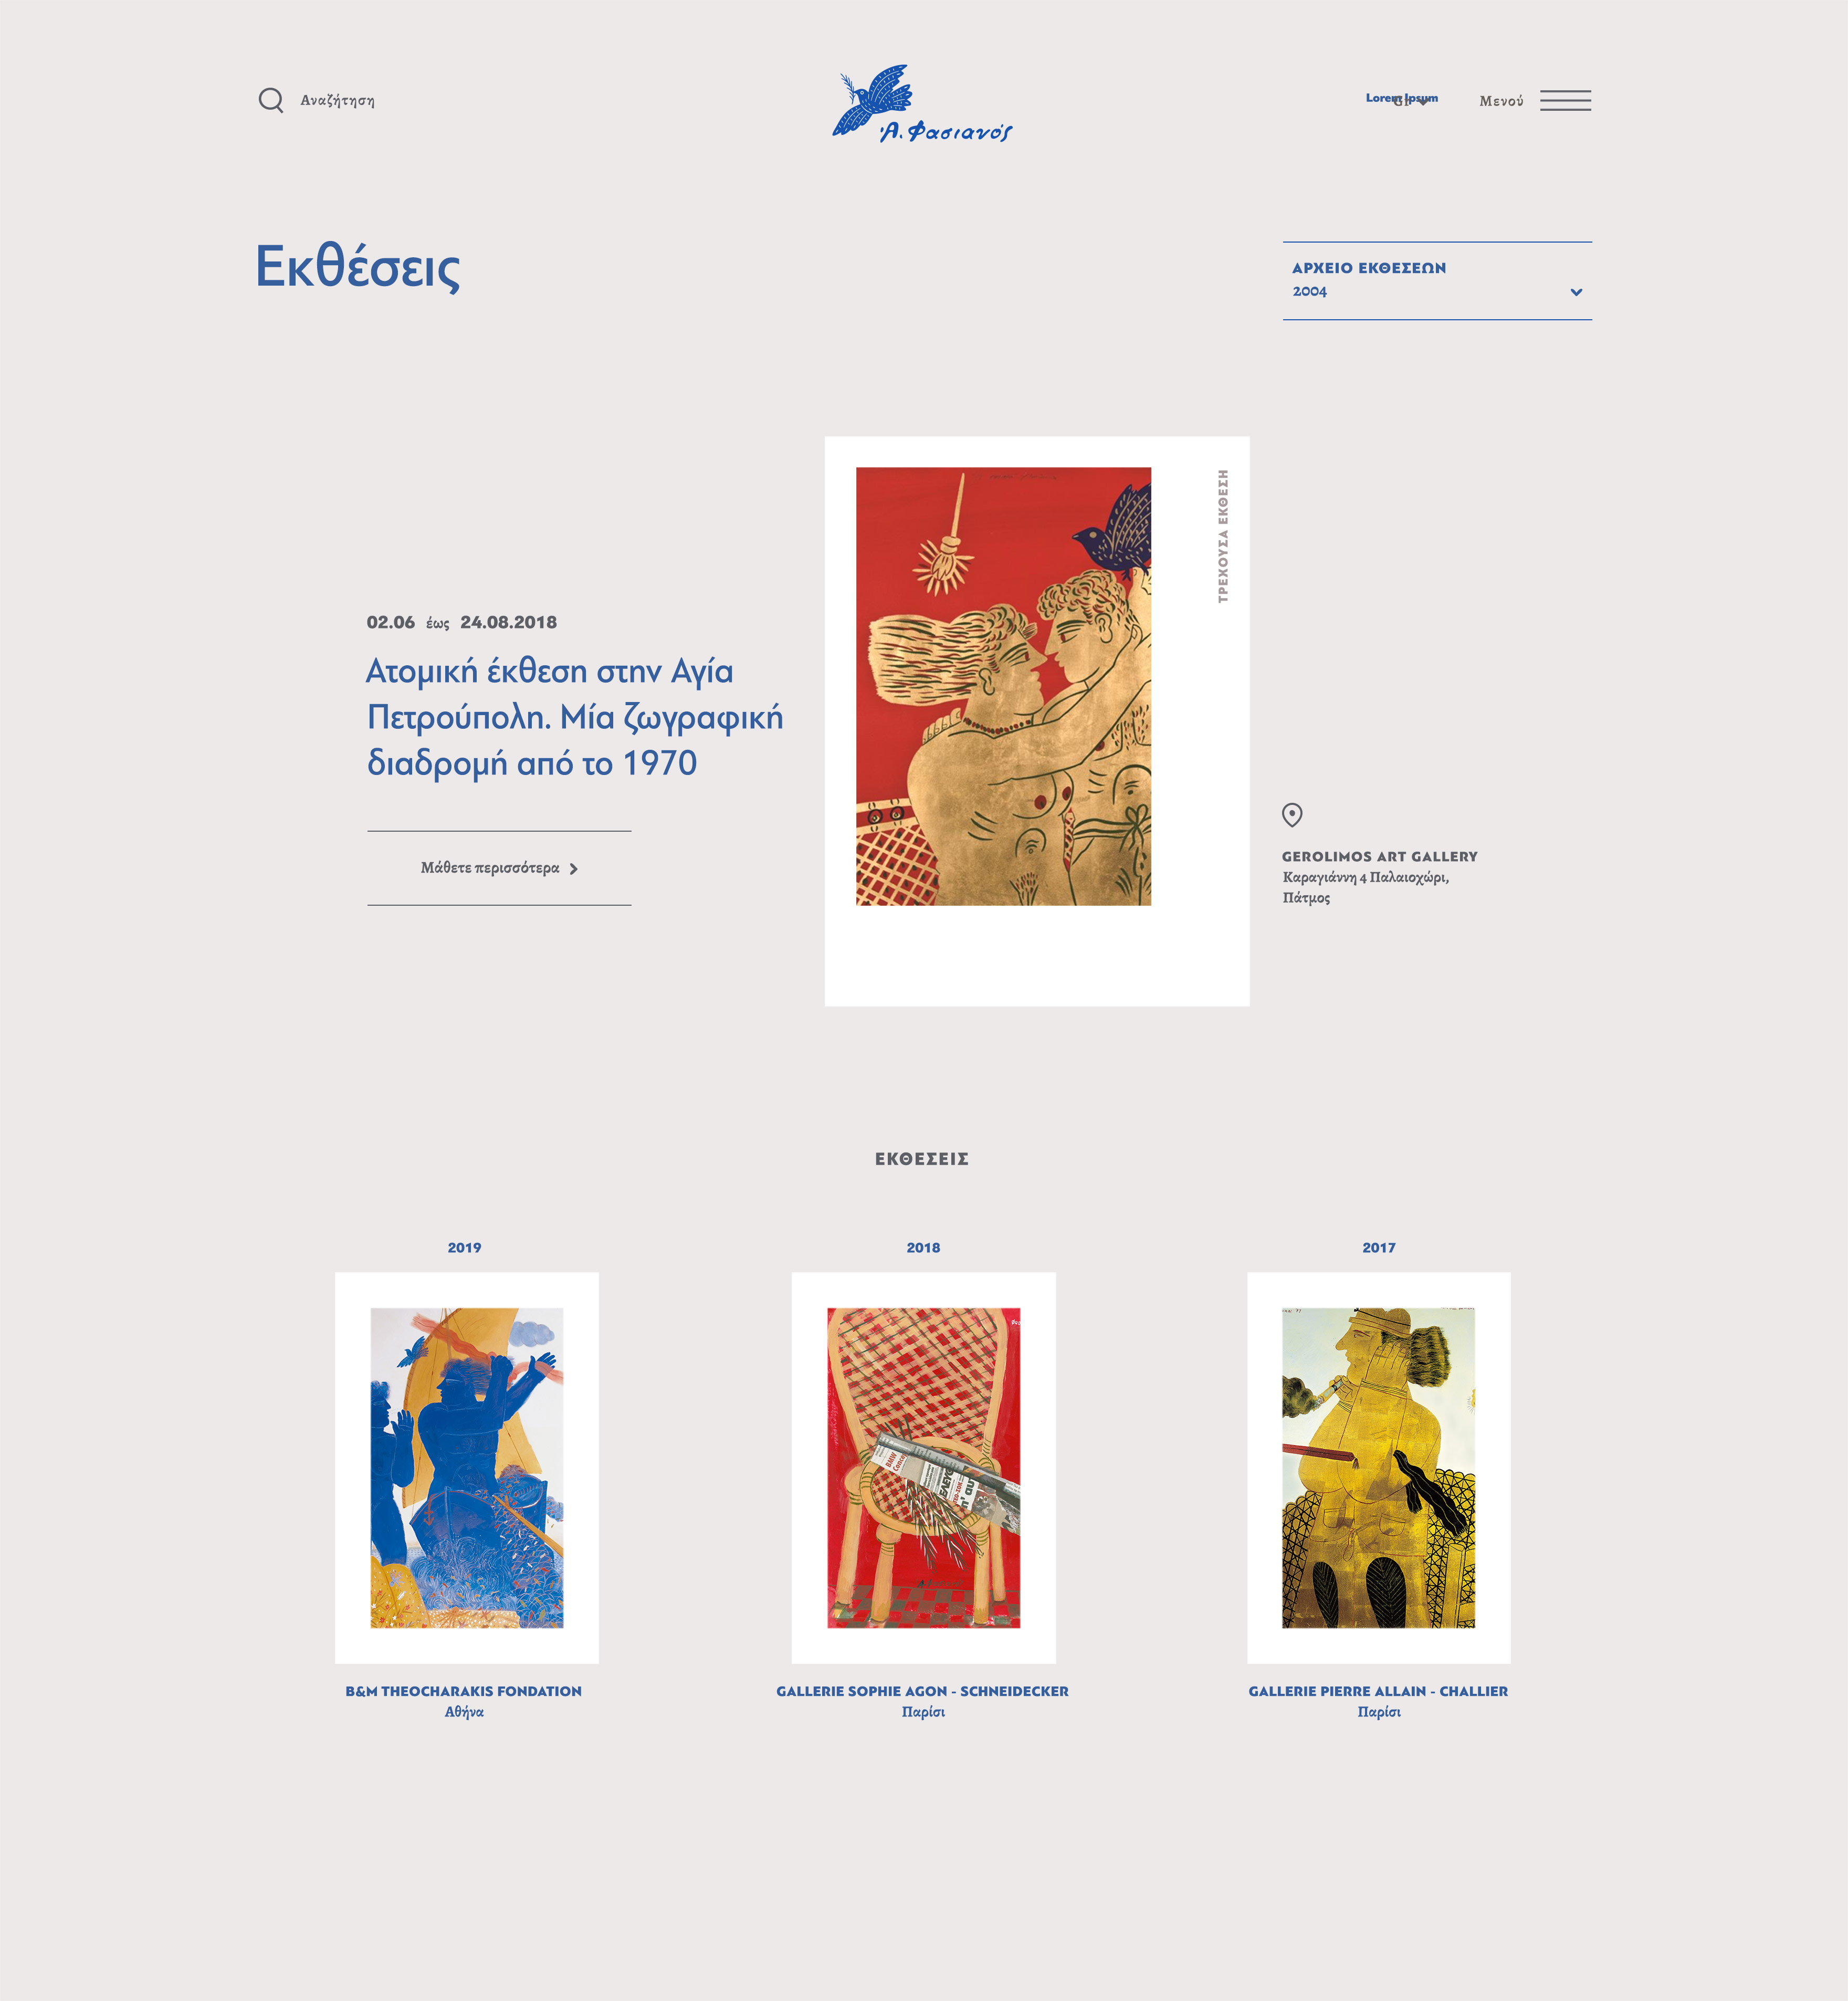 alekos fassianos website design exhibition list